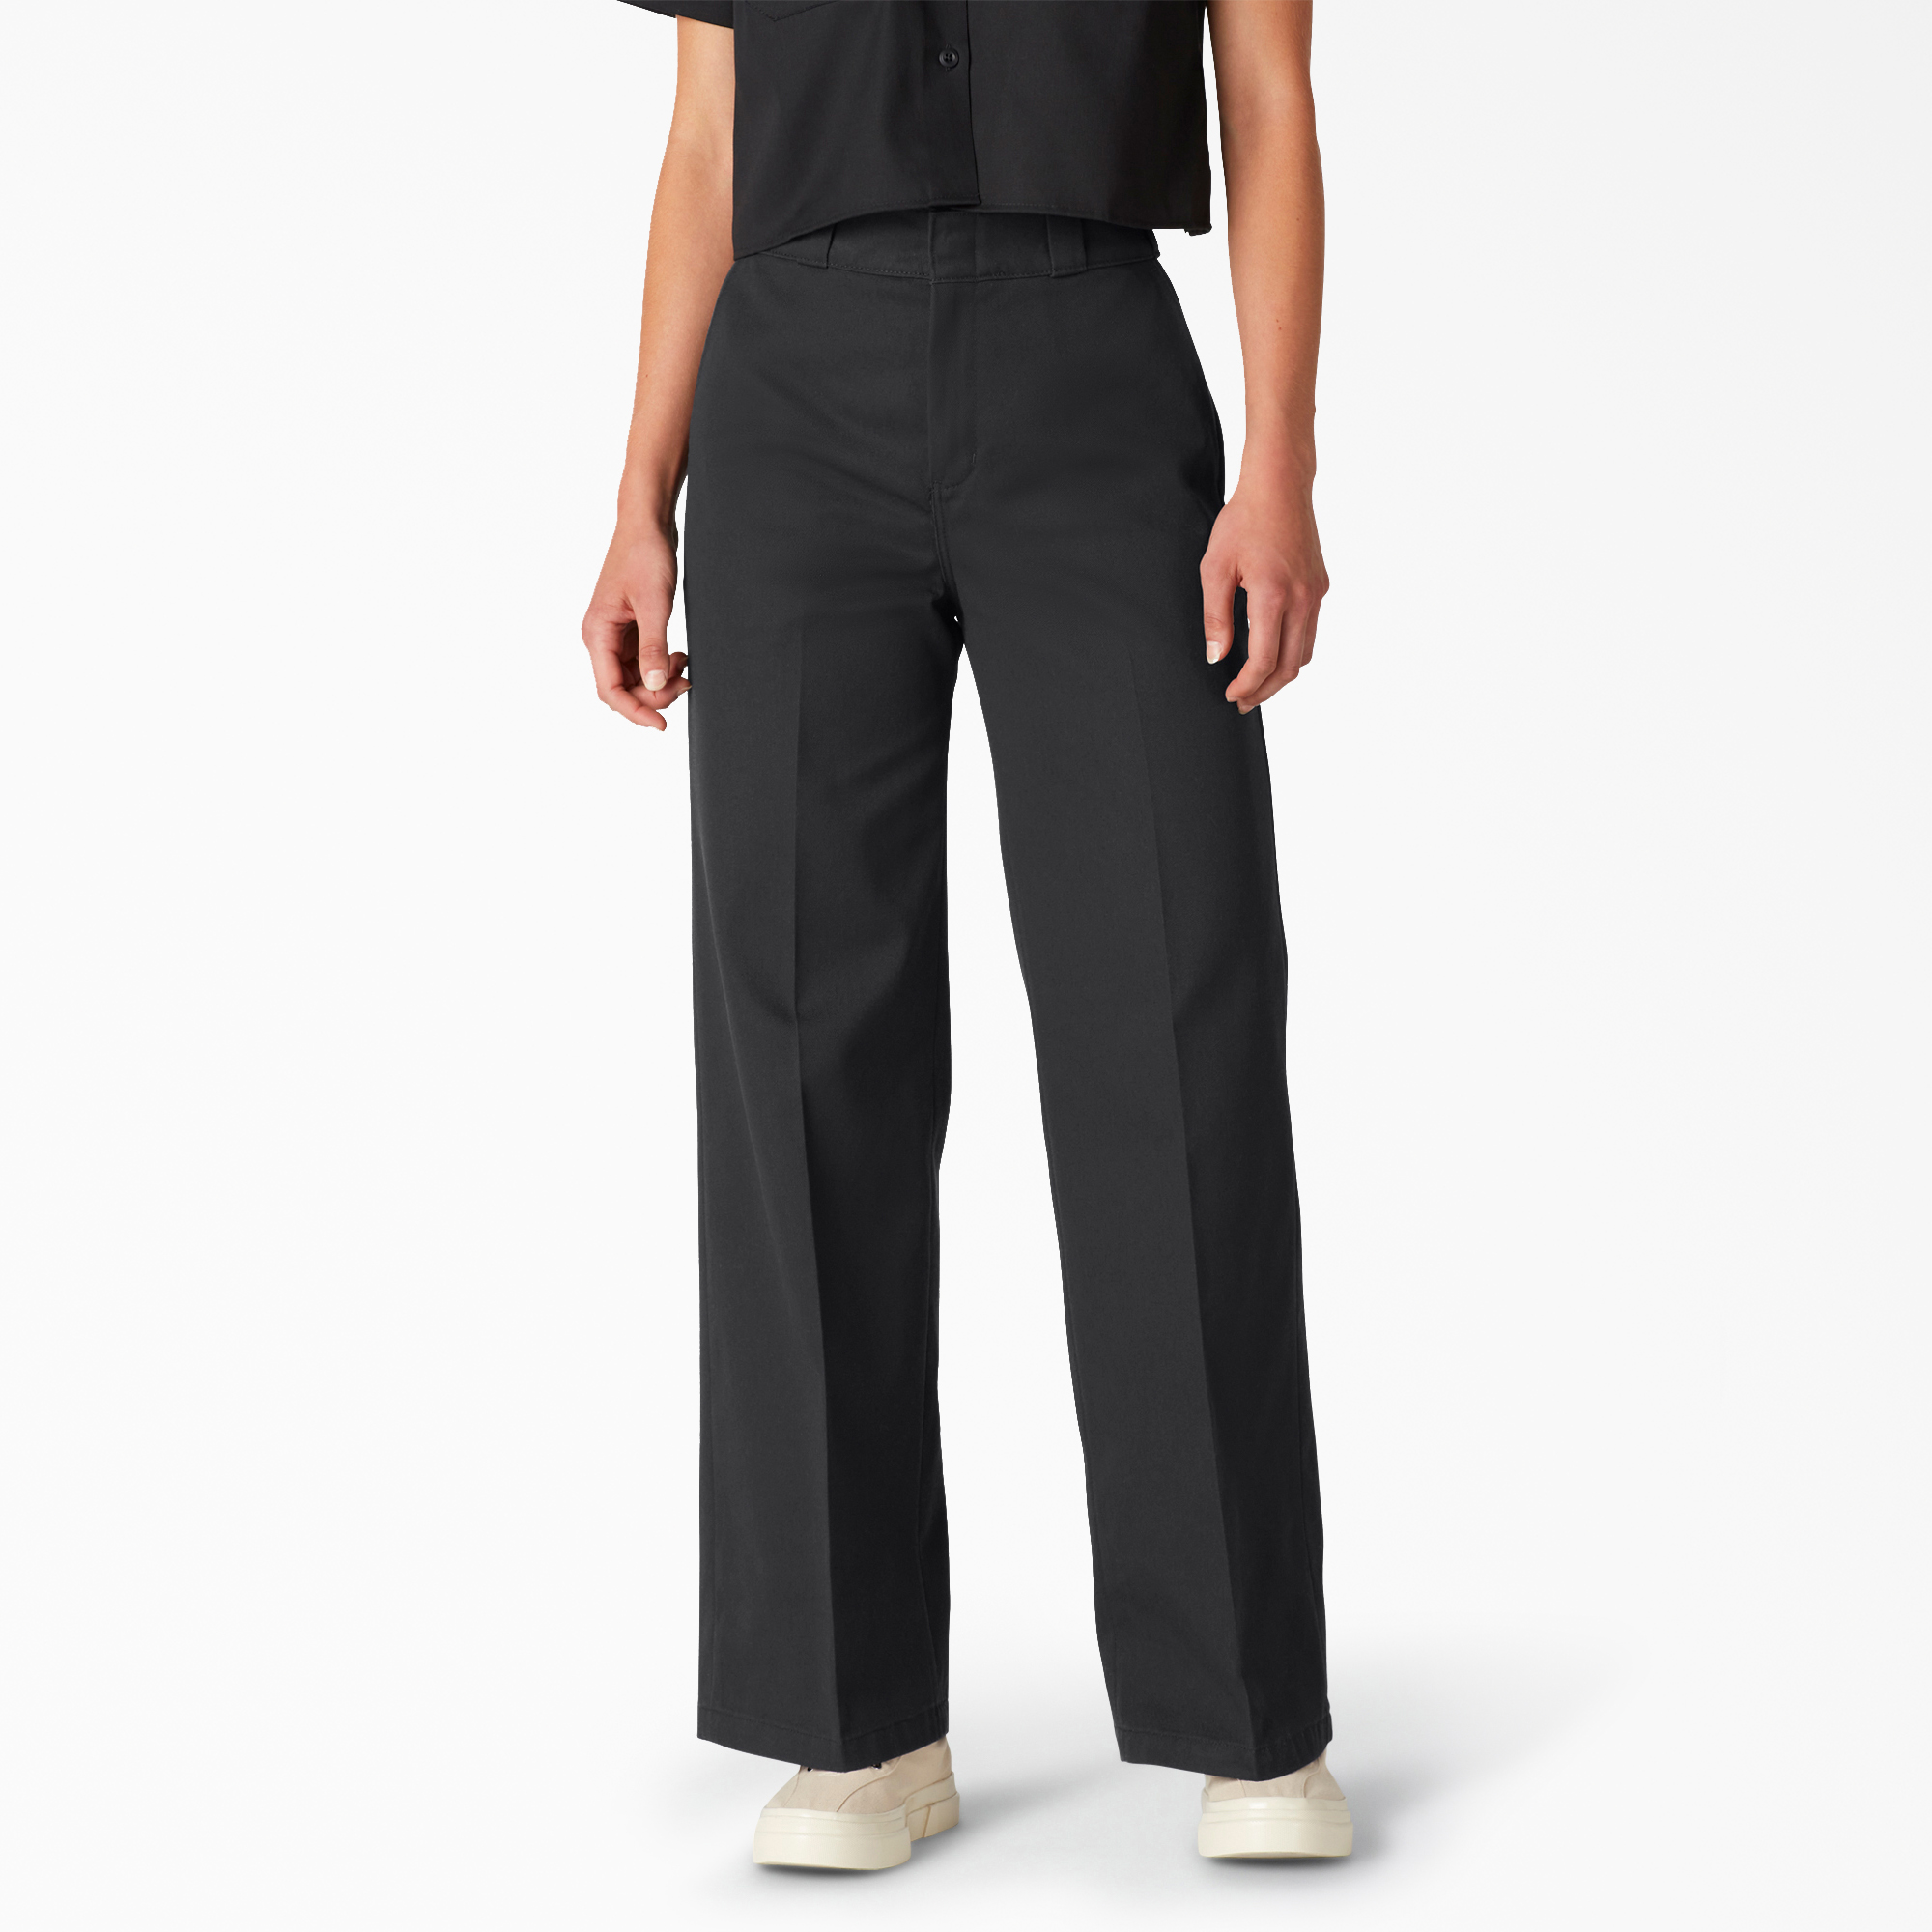 Black S WOMEN FASHION Trousers Slacks Palazzo Sisley slacks discount 65% 